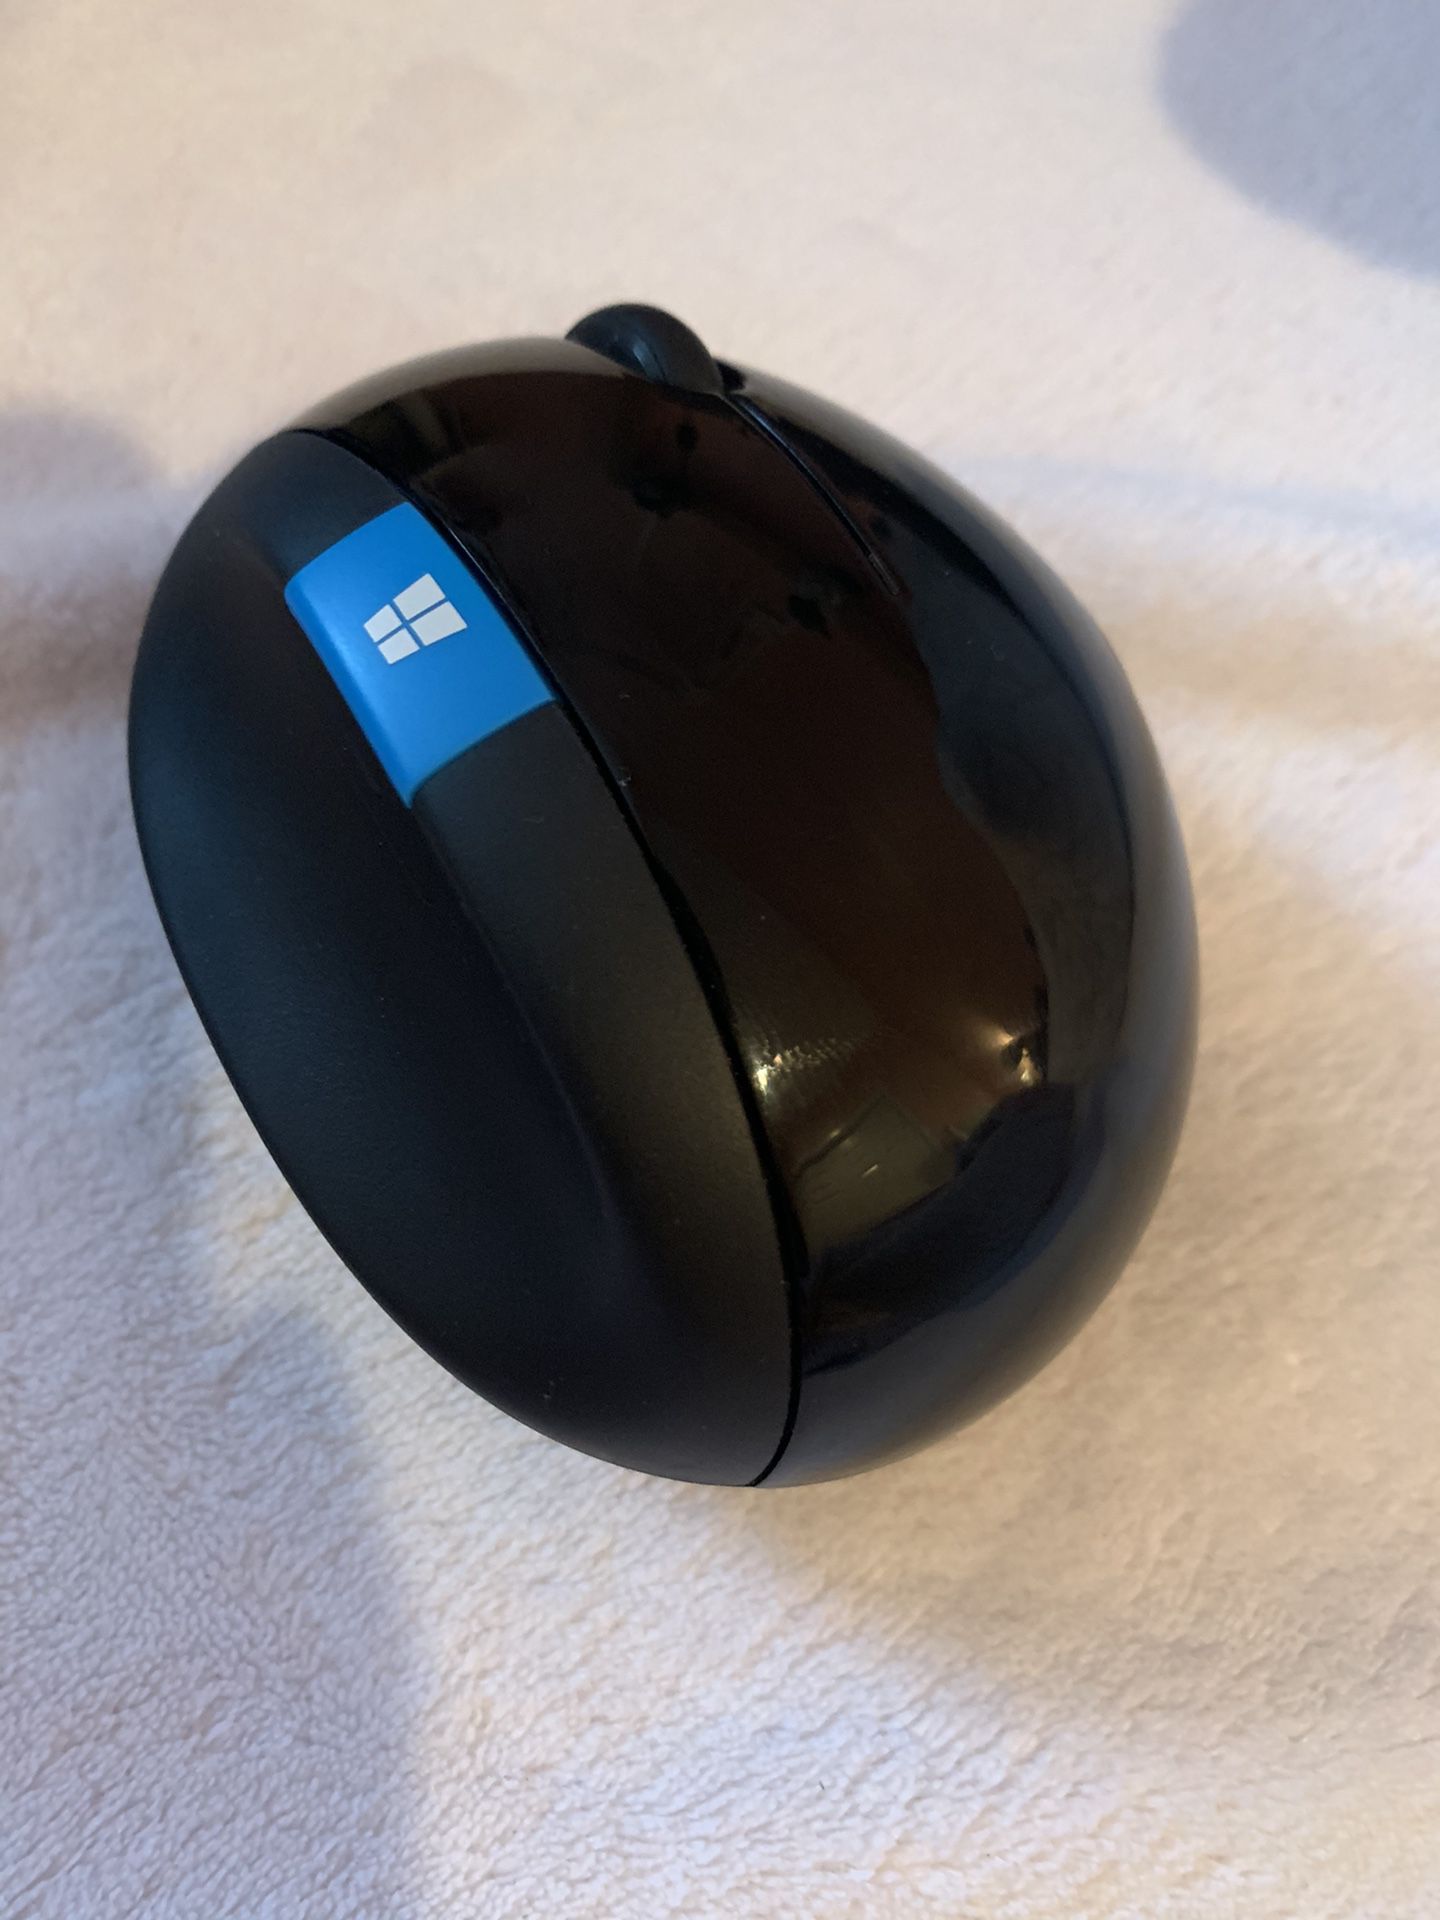 Microsoft Sculpt Ergonomic Mouse 2.4ghz wireless